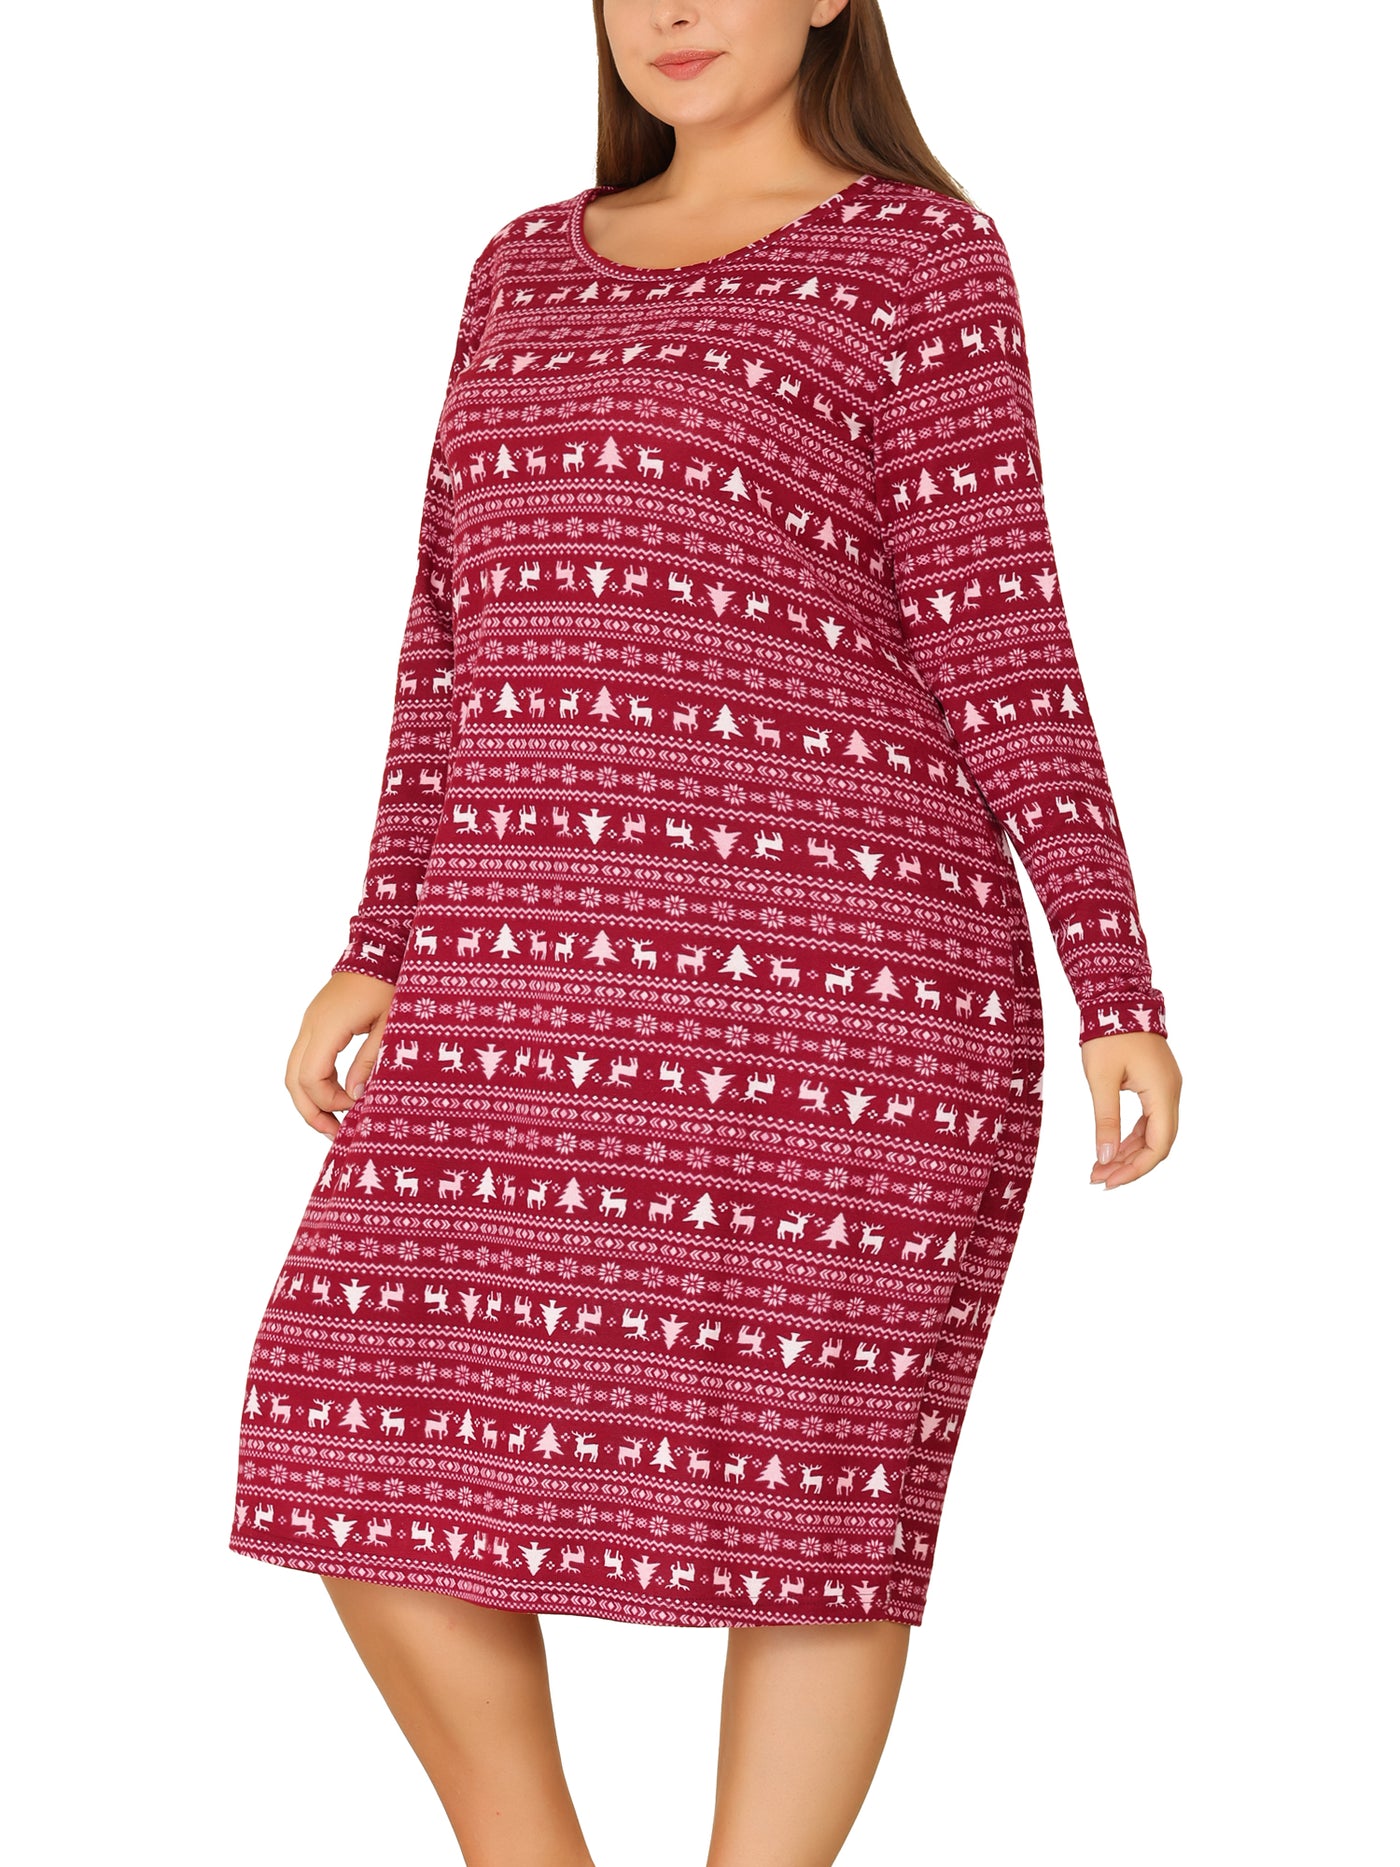 Bublédon Women's Plus Size Sleepwear Comfy Long Sleeve Sleep Dress Nightgown